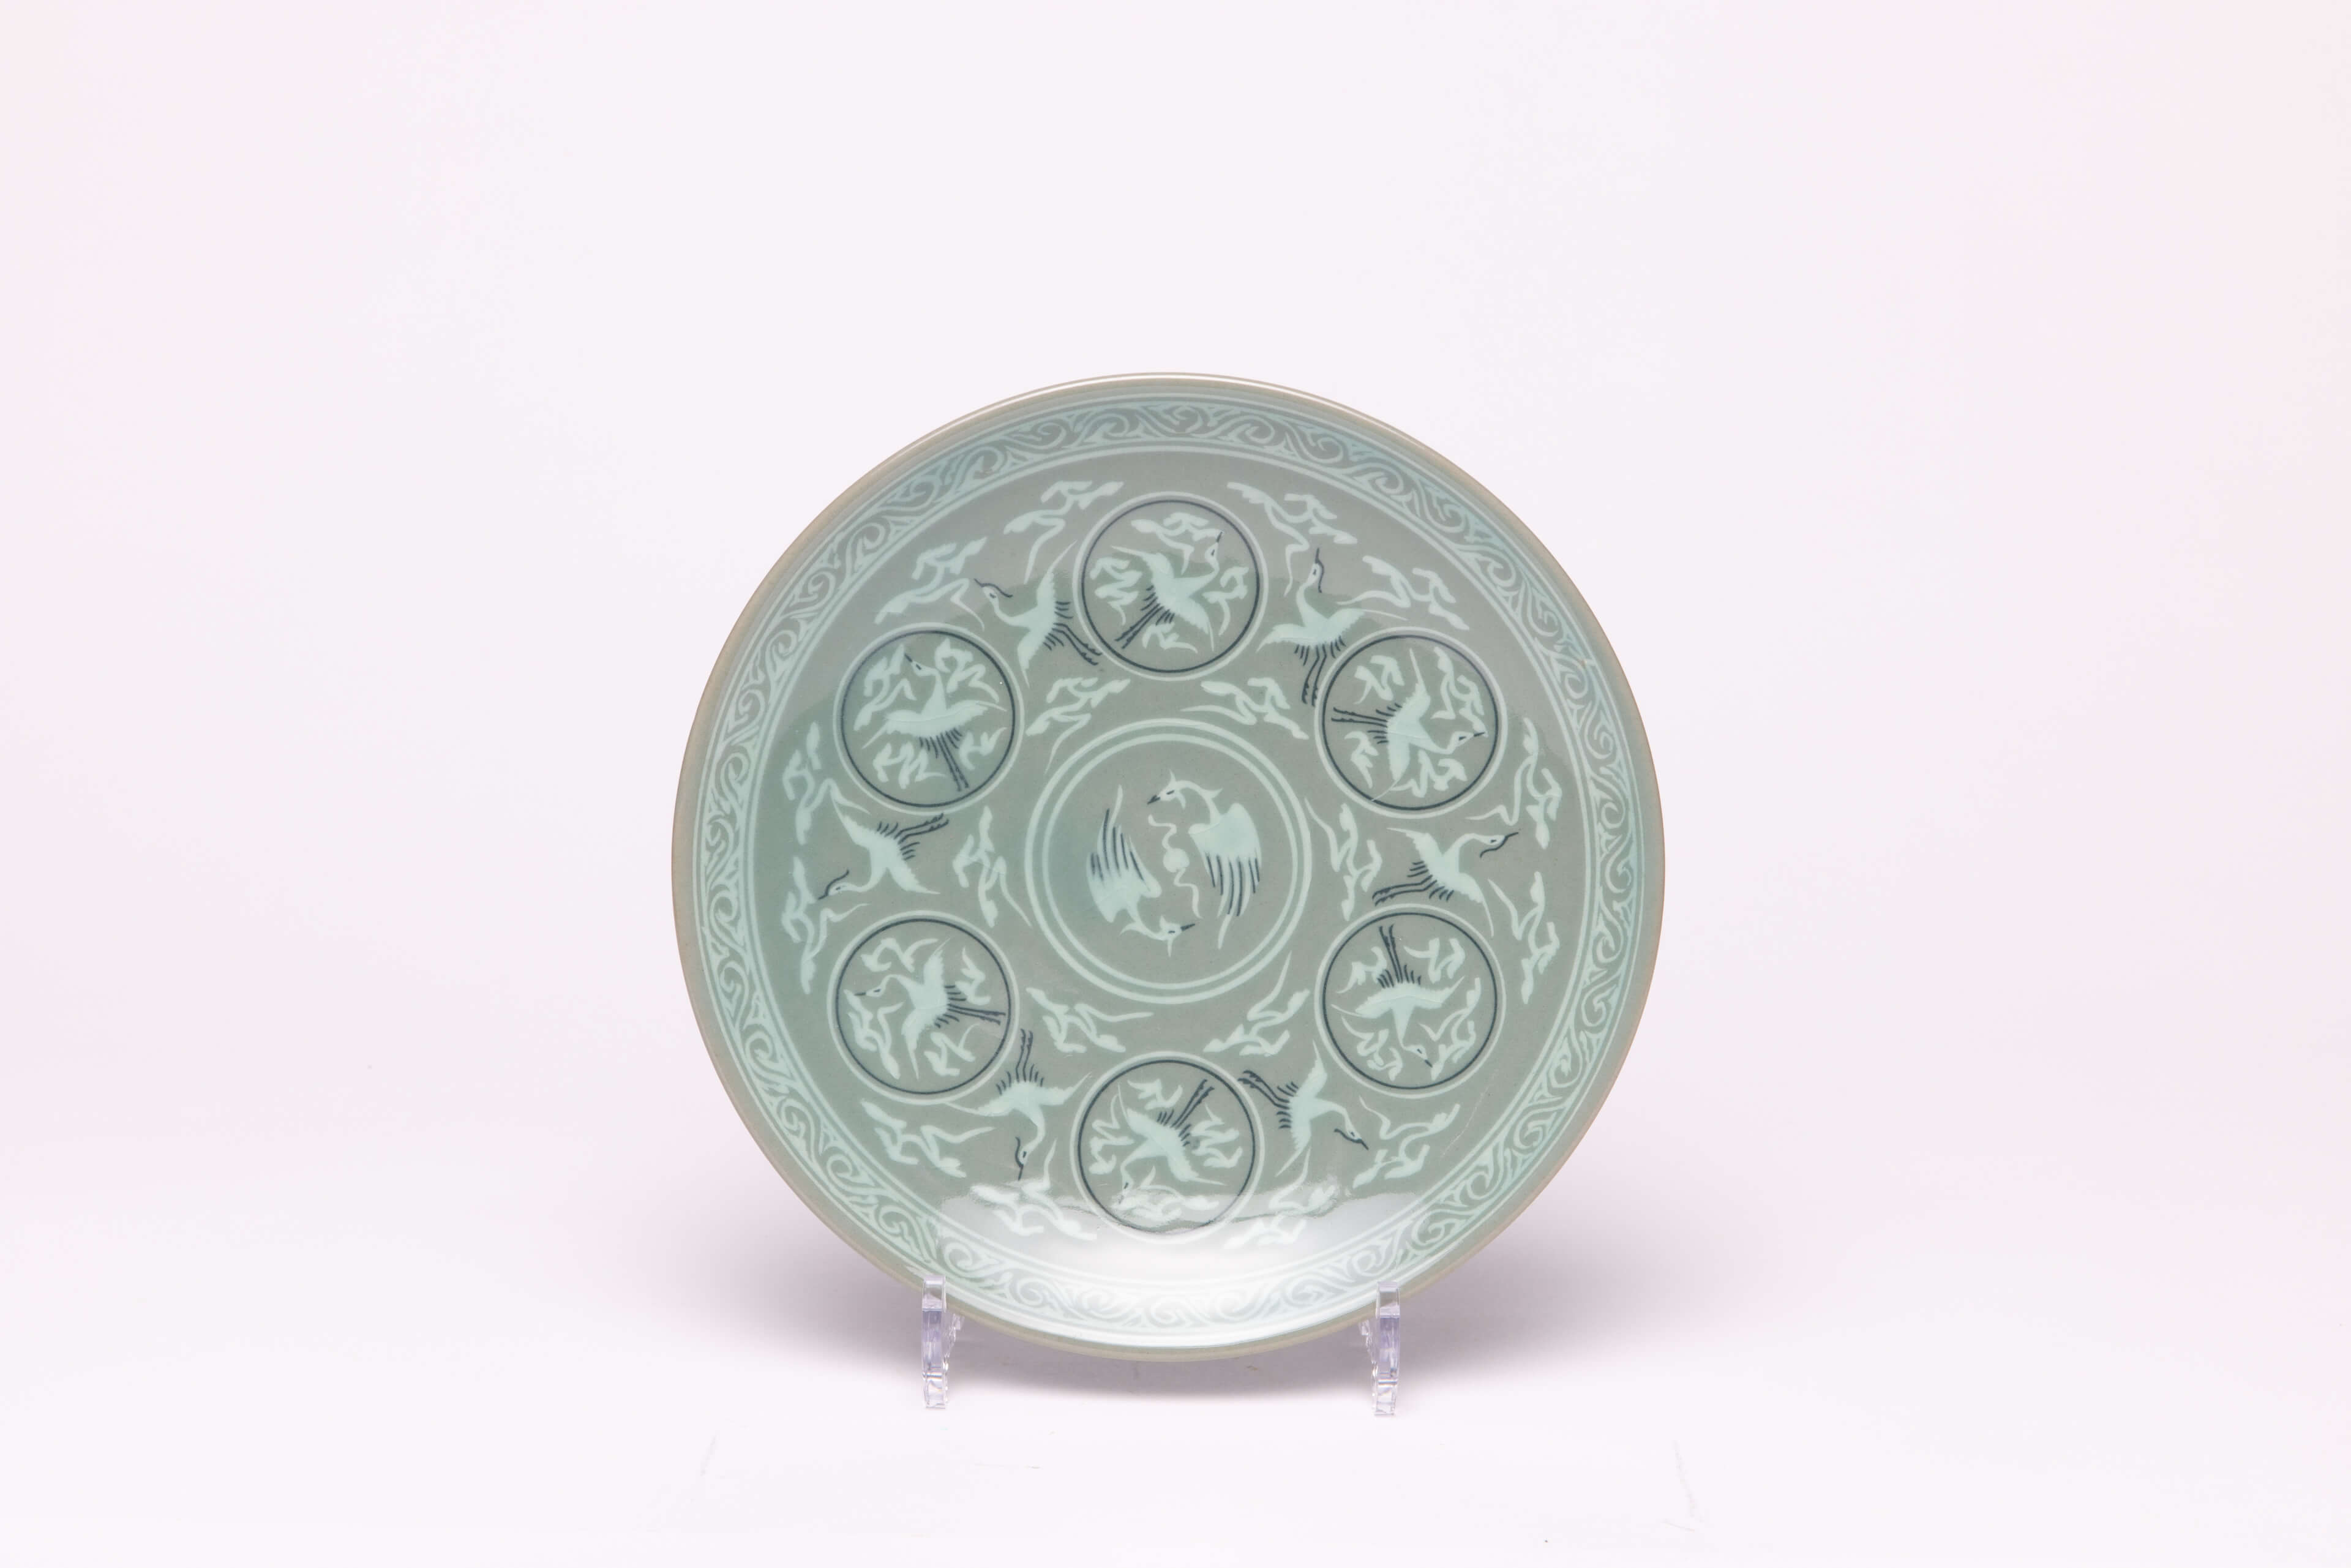 Goryeo inlaid celadon ware-圖片